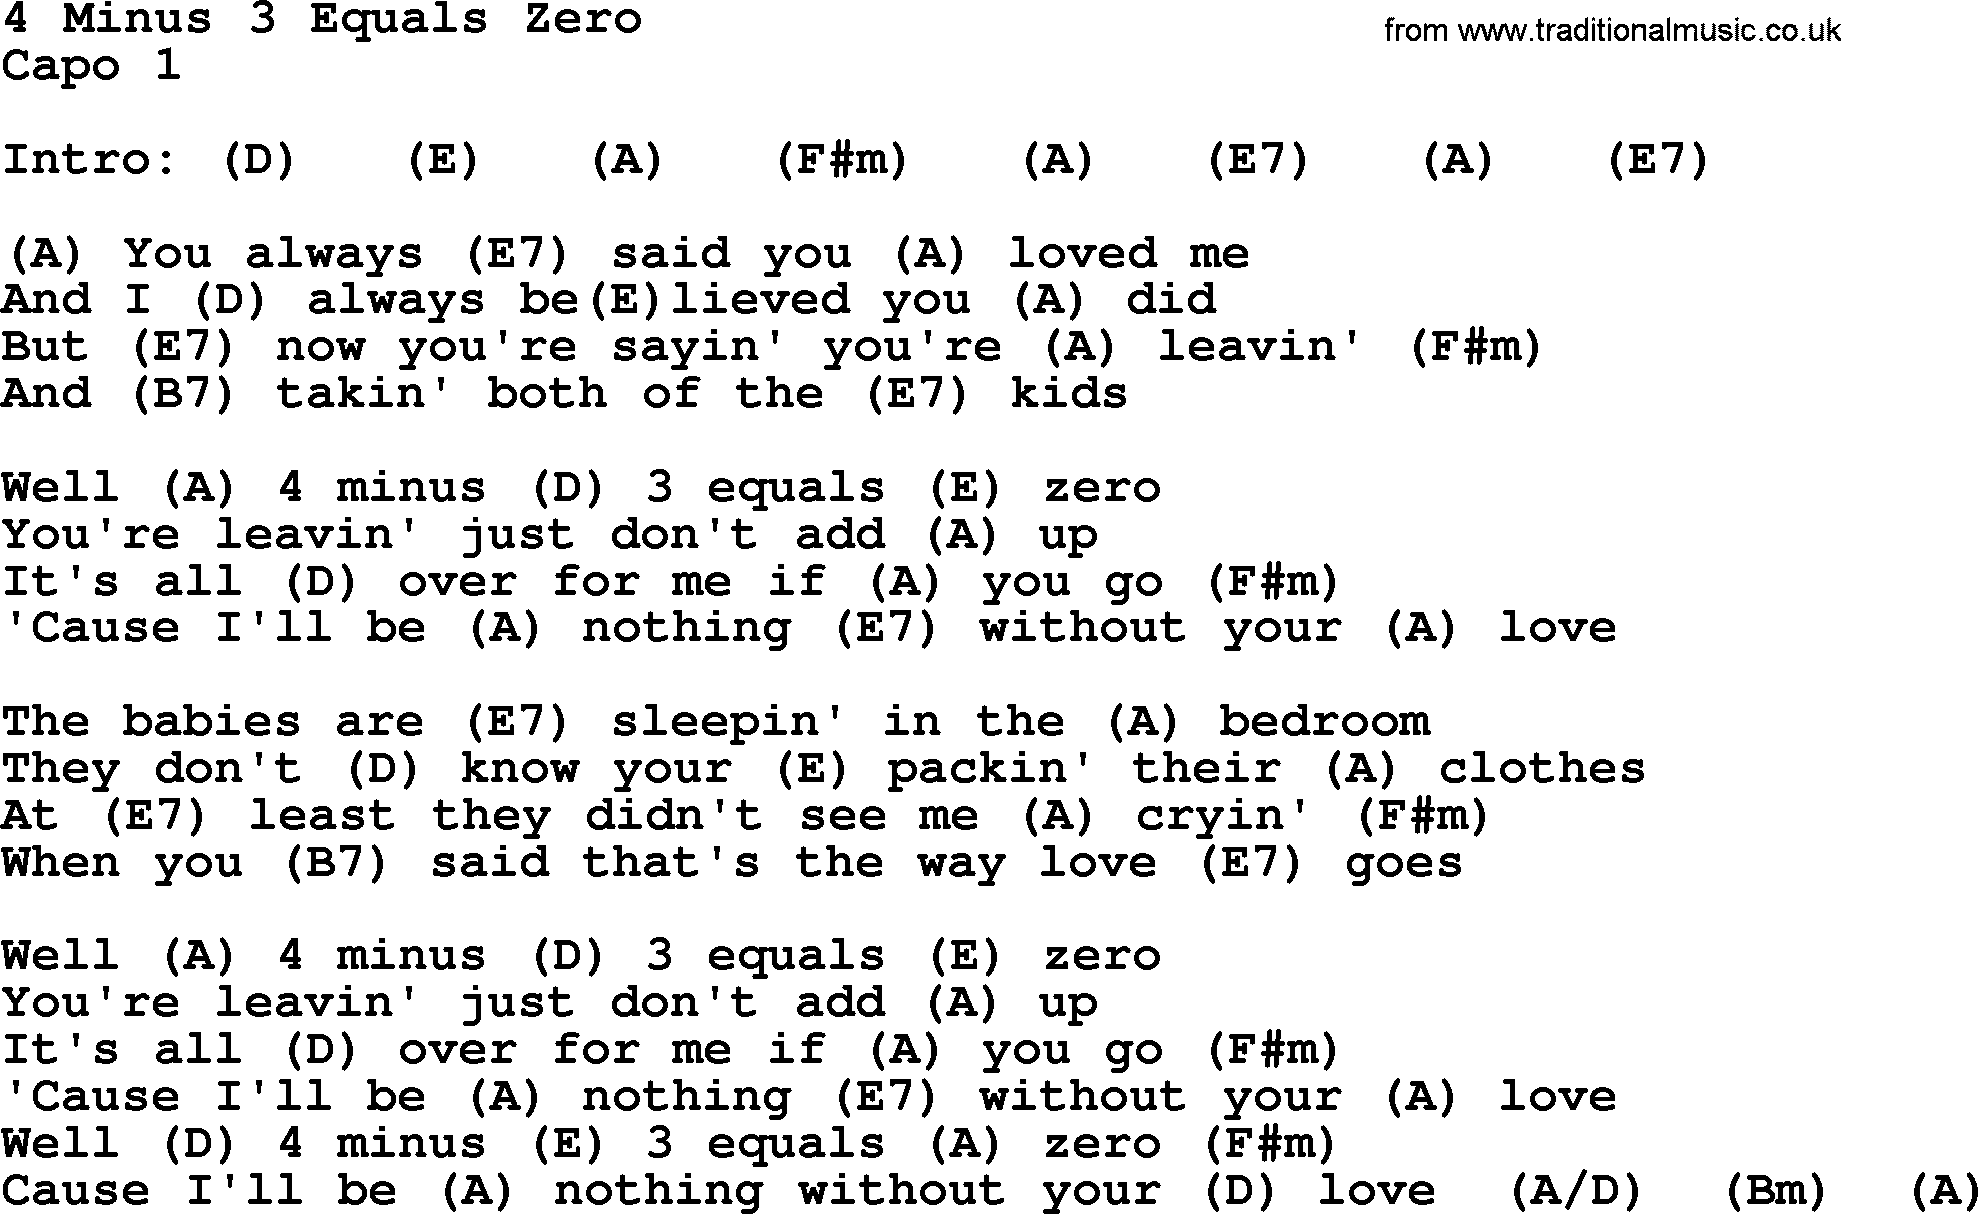 George Strait song: 4 Minus 3 Equals Zero, lyrics and chords